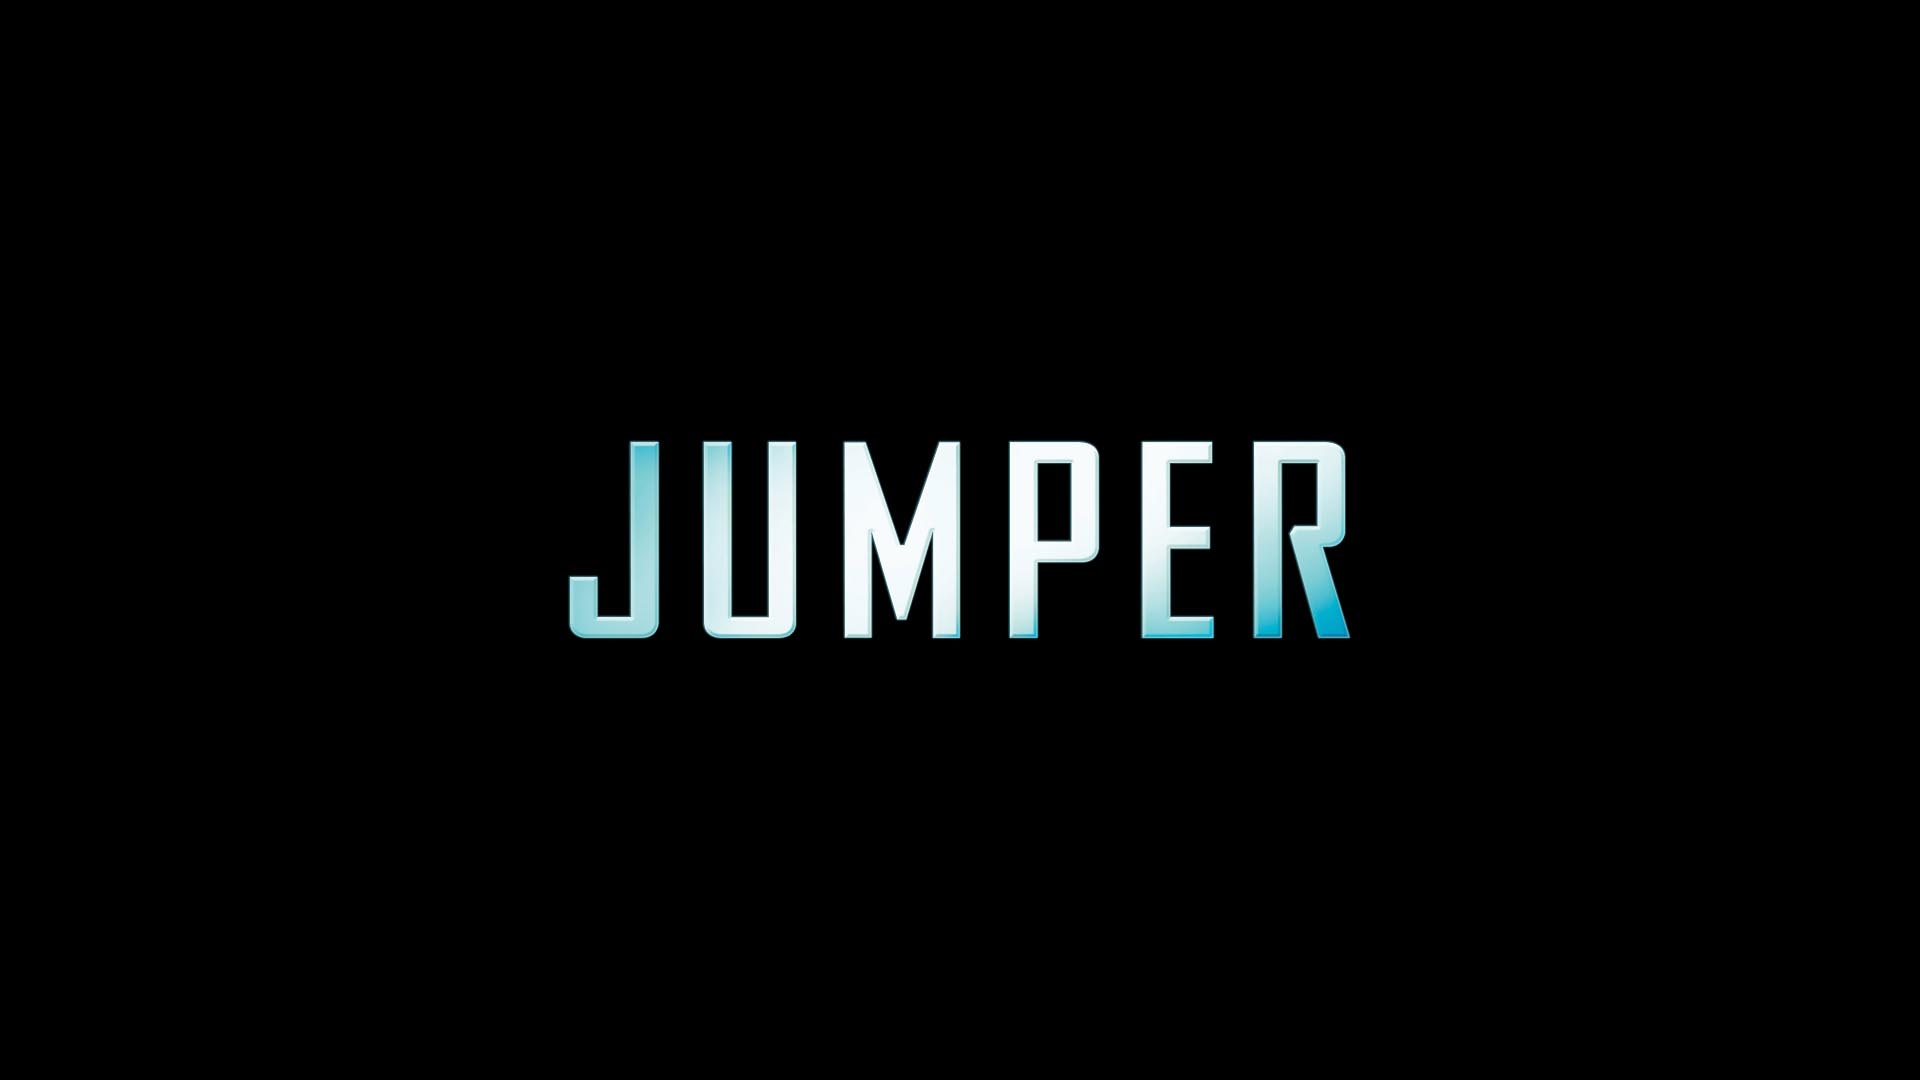 Télécharger des fonds d'écran Jumper HD